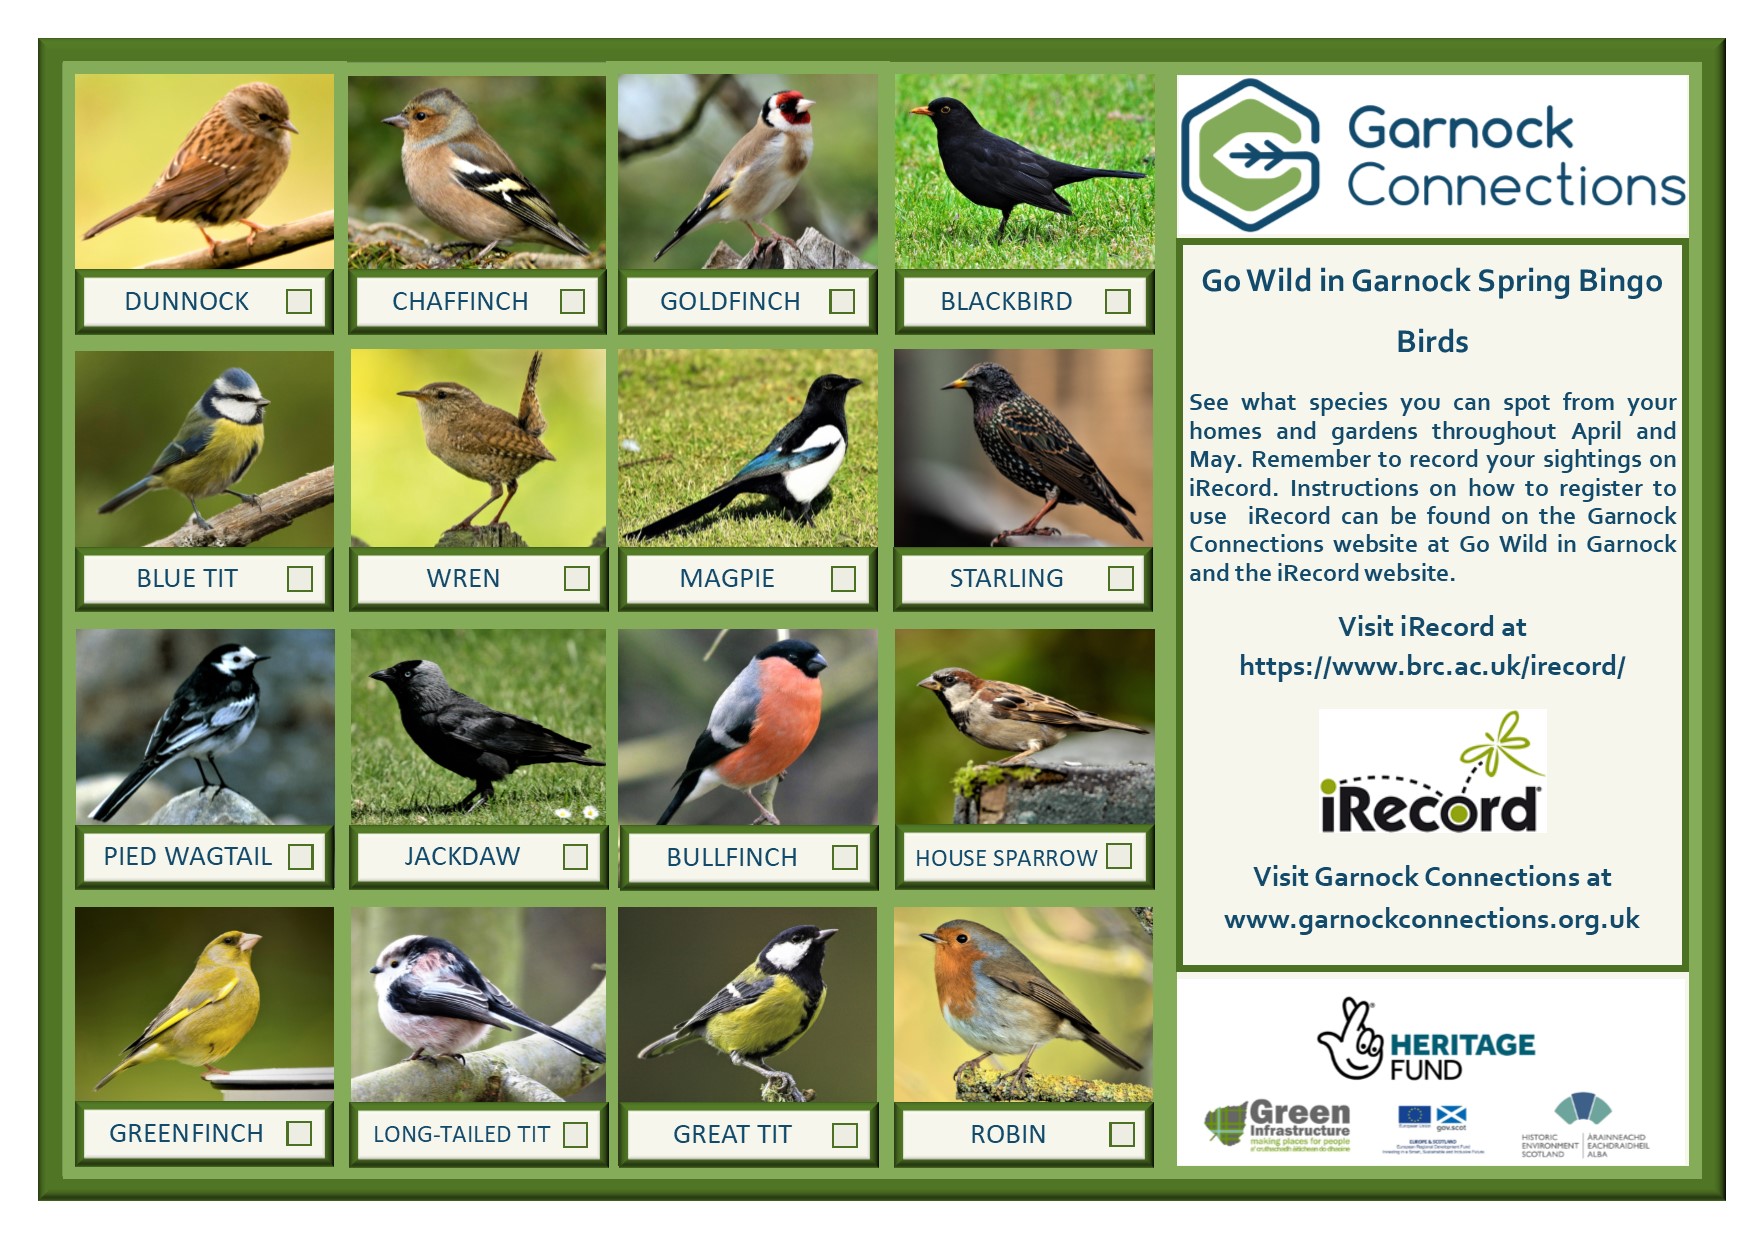 Go Wild in Garnock - Spring Bingo Birds card image